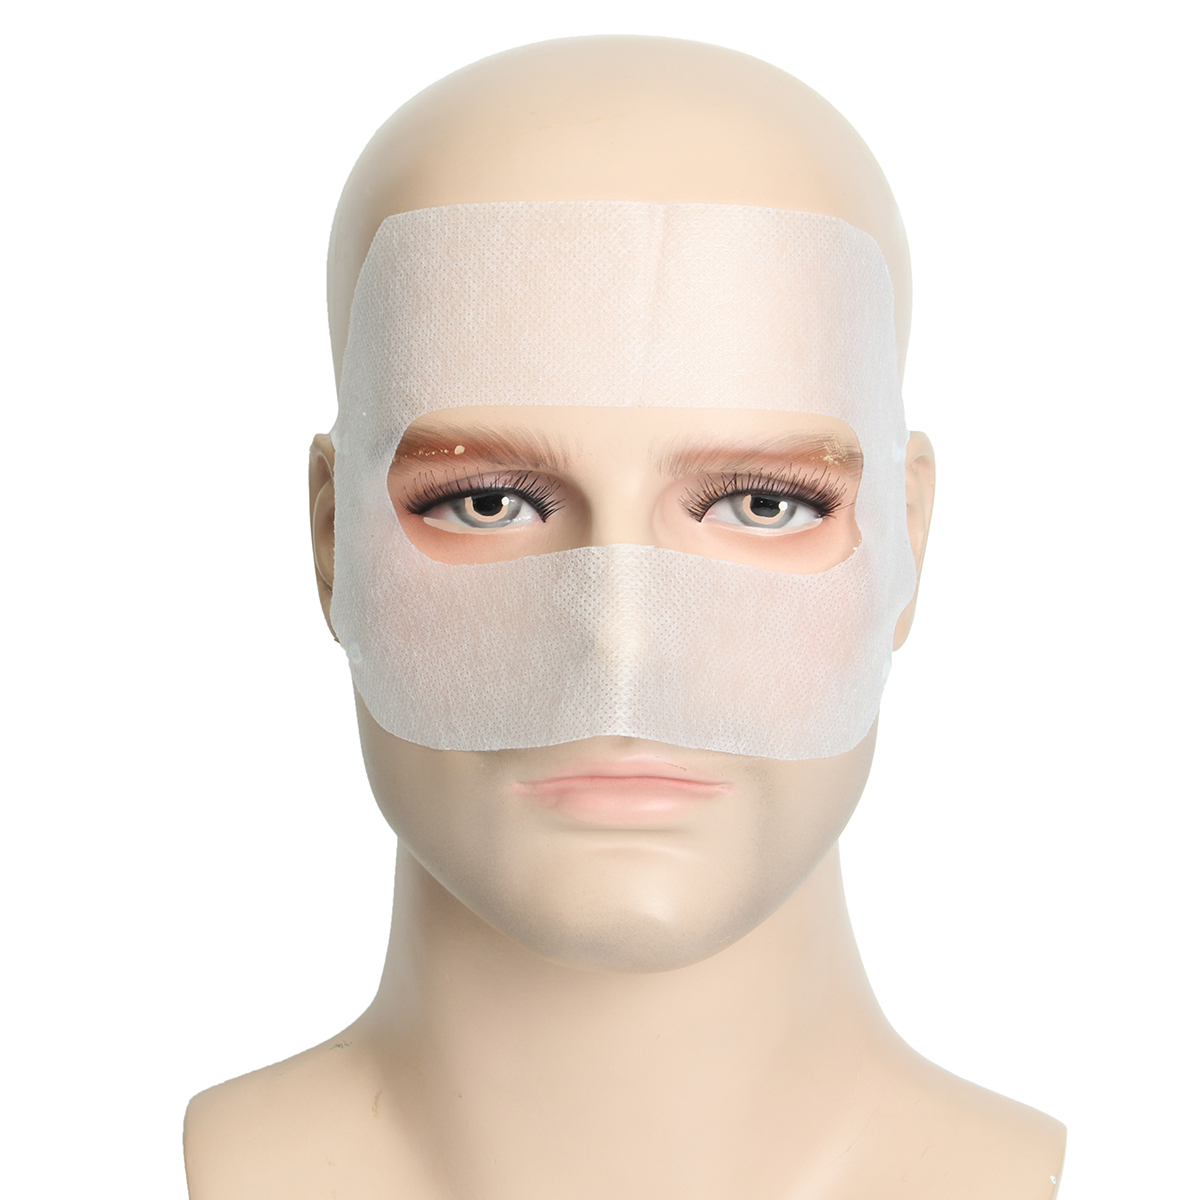 

100Pcs Protective Hygiene Eye Mask Ninja Mask for VR Glasses Disposable Eyemask